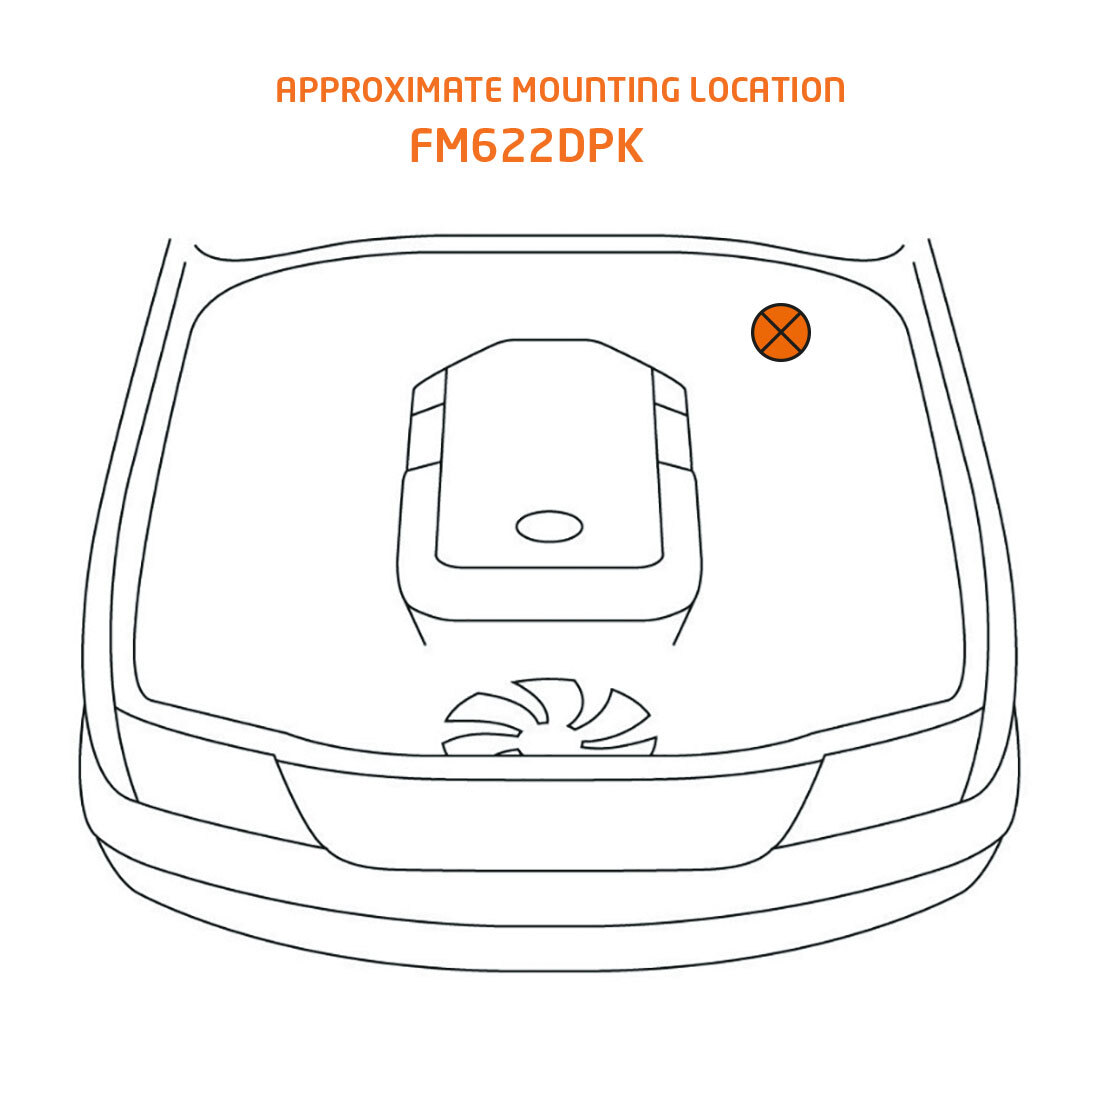 Fuel Manager Pre-Filter Kit For Mitsubishi Triton 2.5L 4D56 2008 - 2015